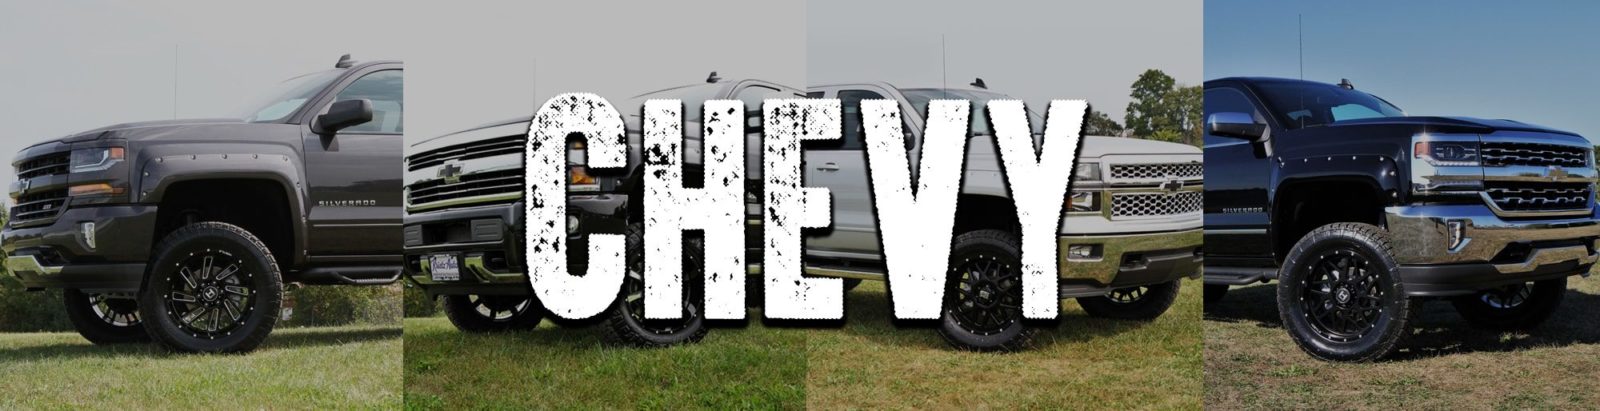 chevy trucks